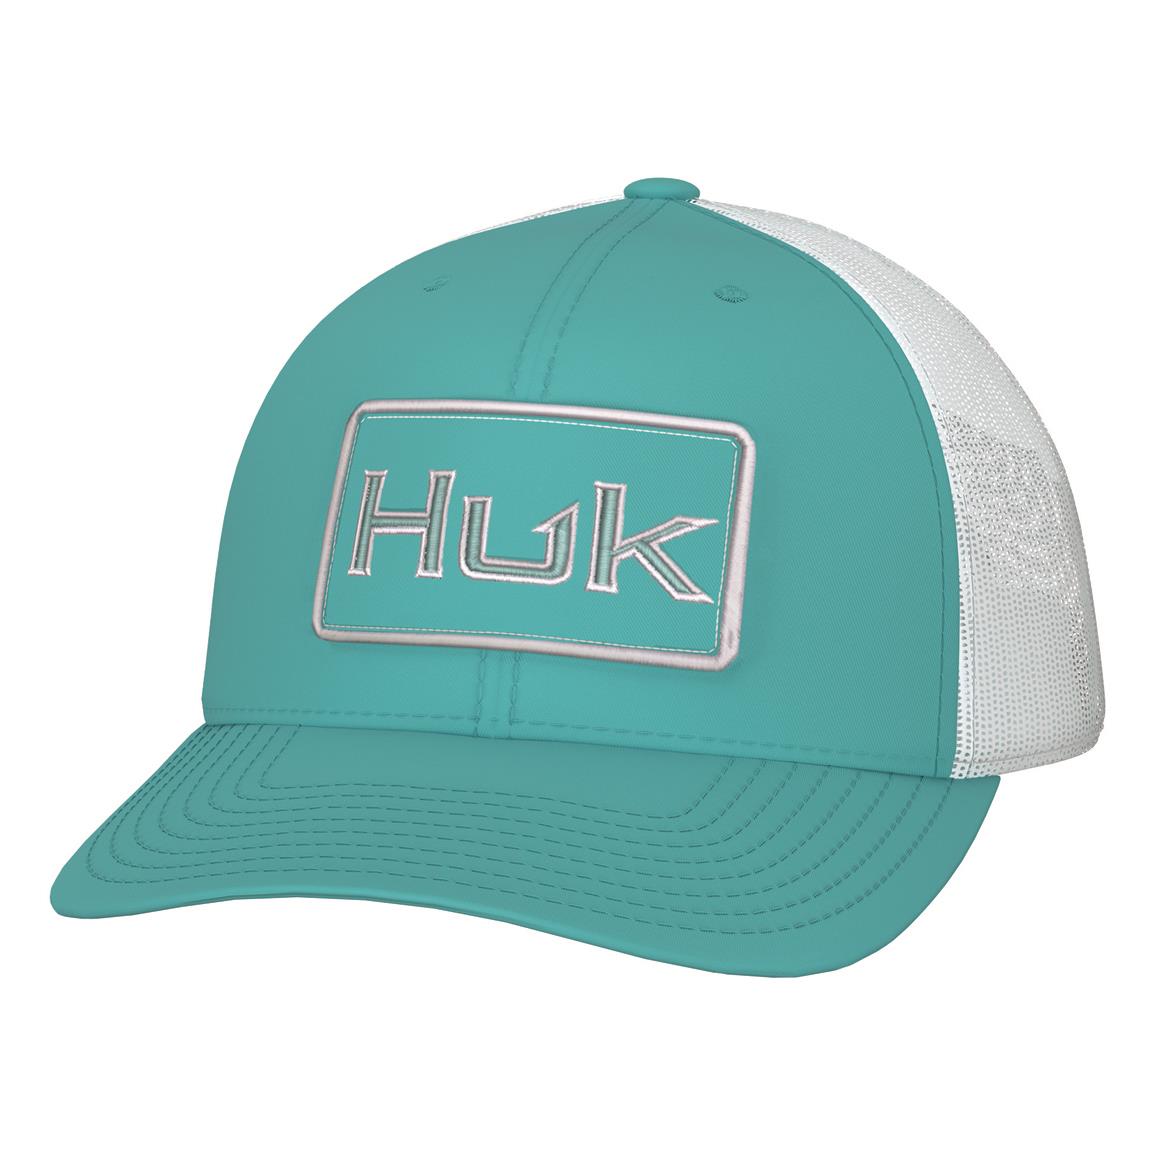 Huk Women's Bold Patch Trucker Hat, Marine Blue